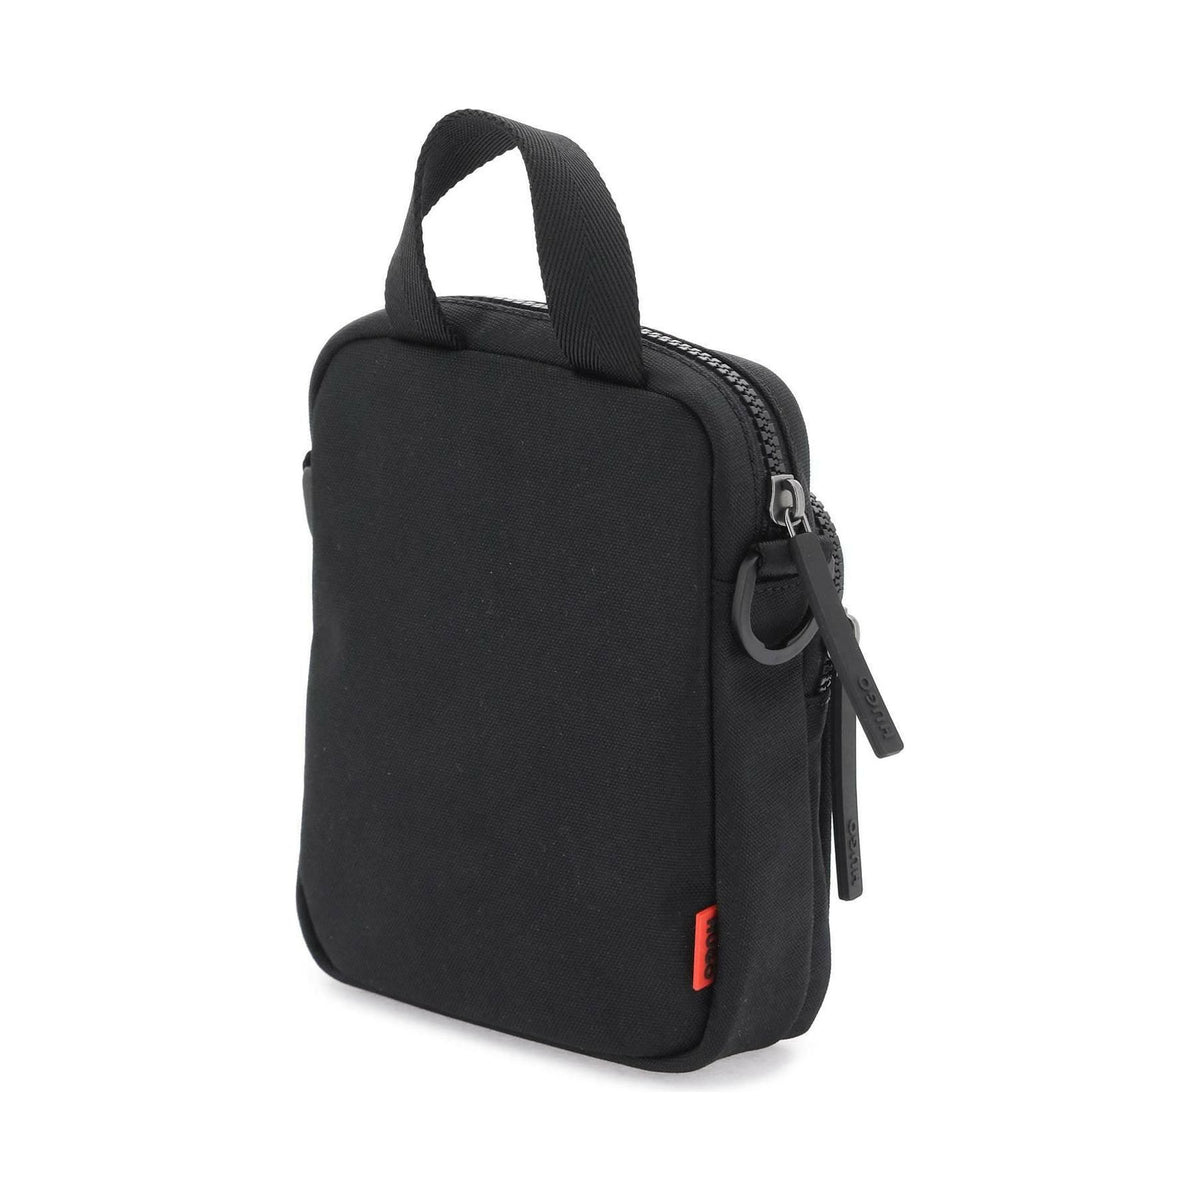 Black Recycled Nylon Adjustable Strap Bag HUGO JOHN JULIA.